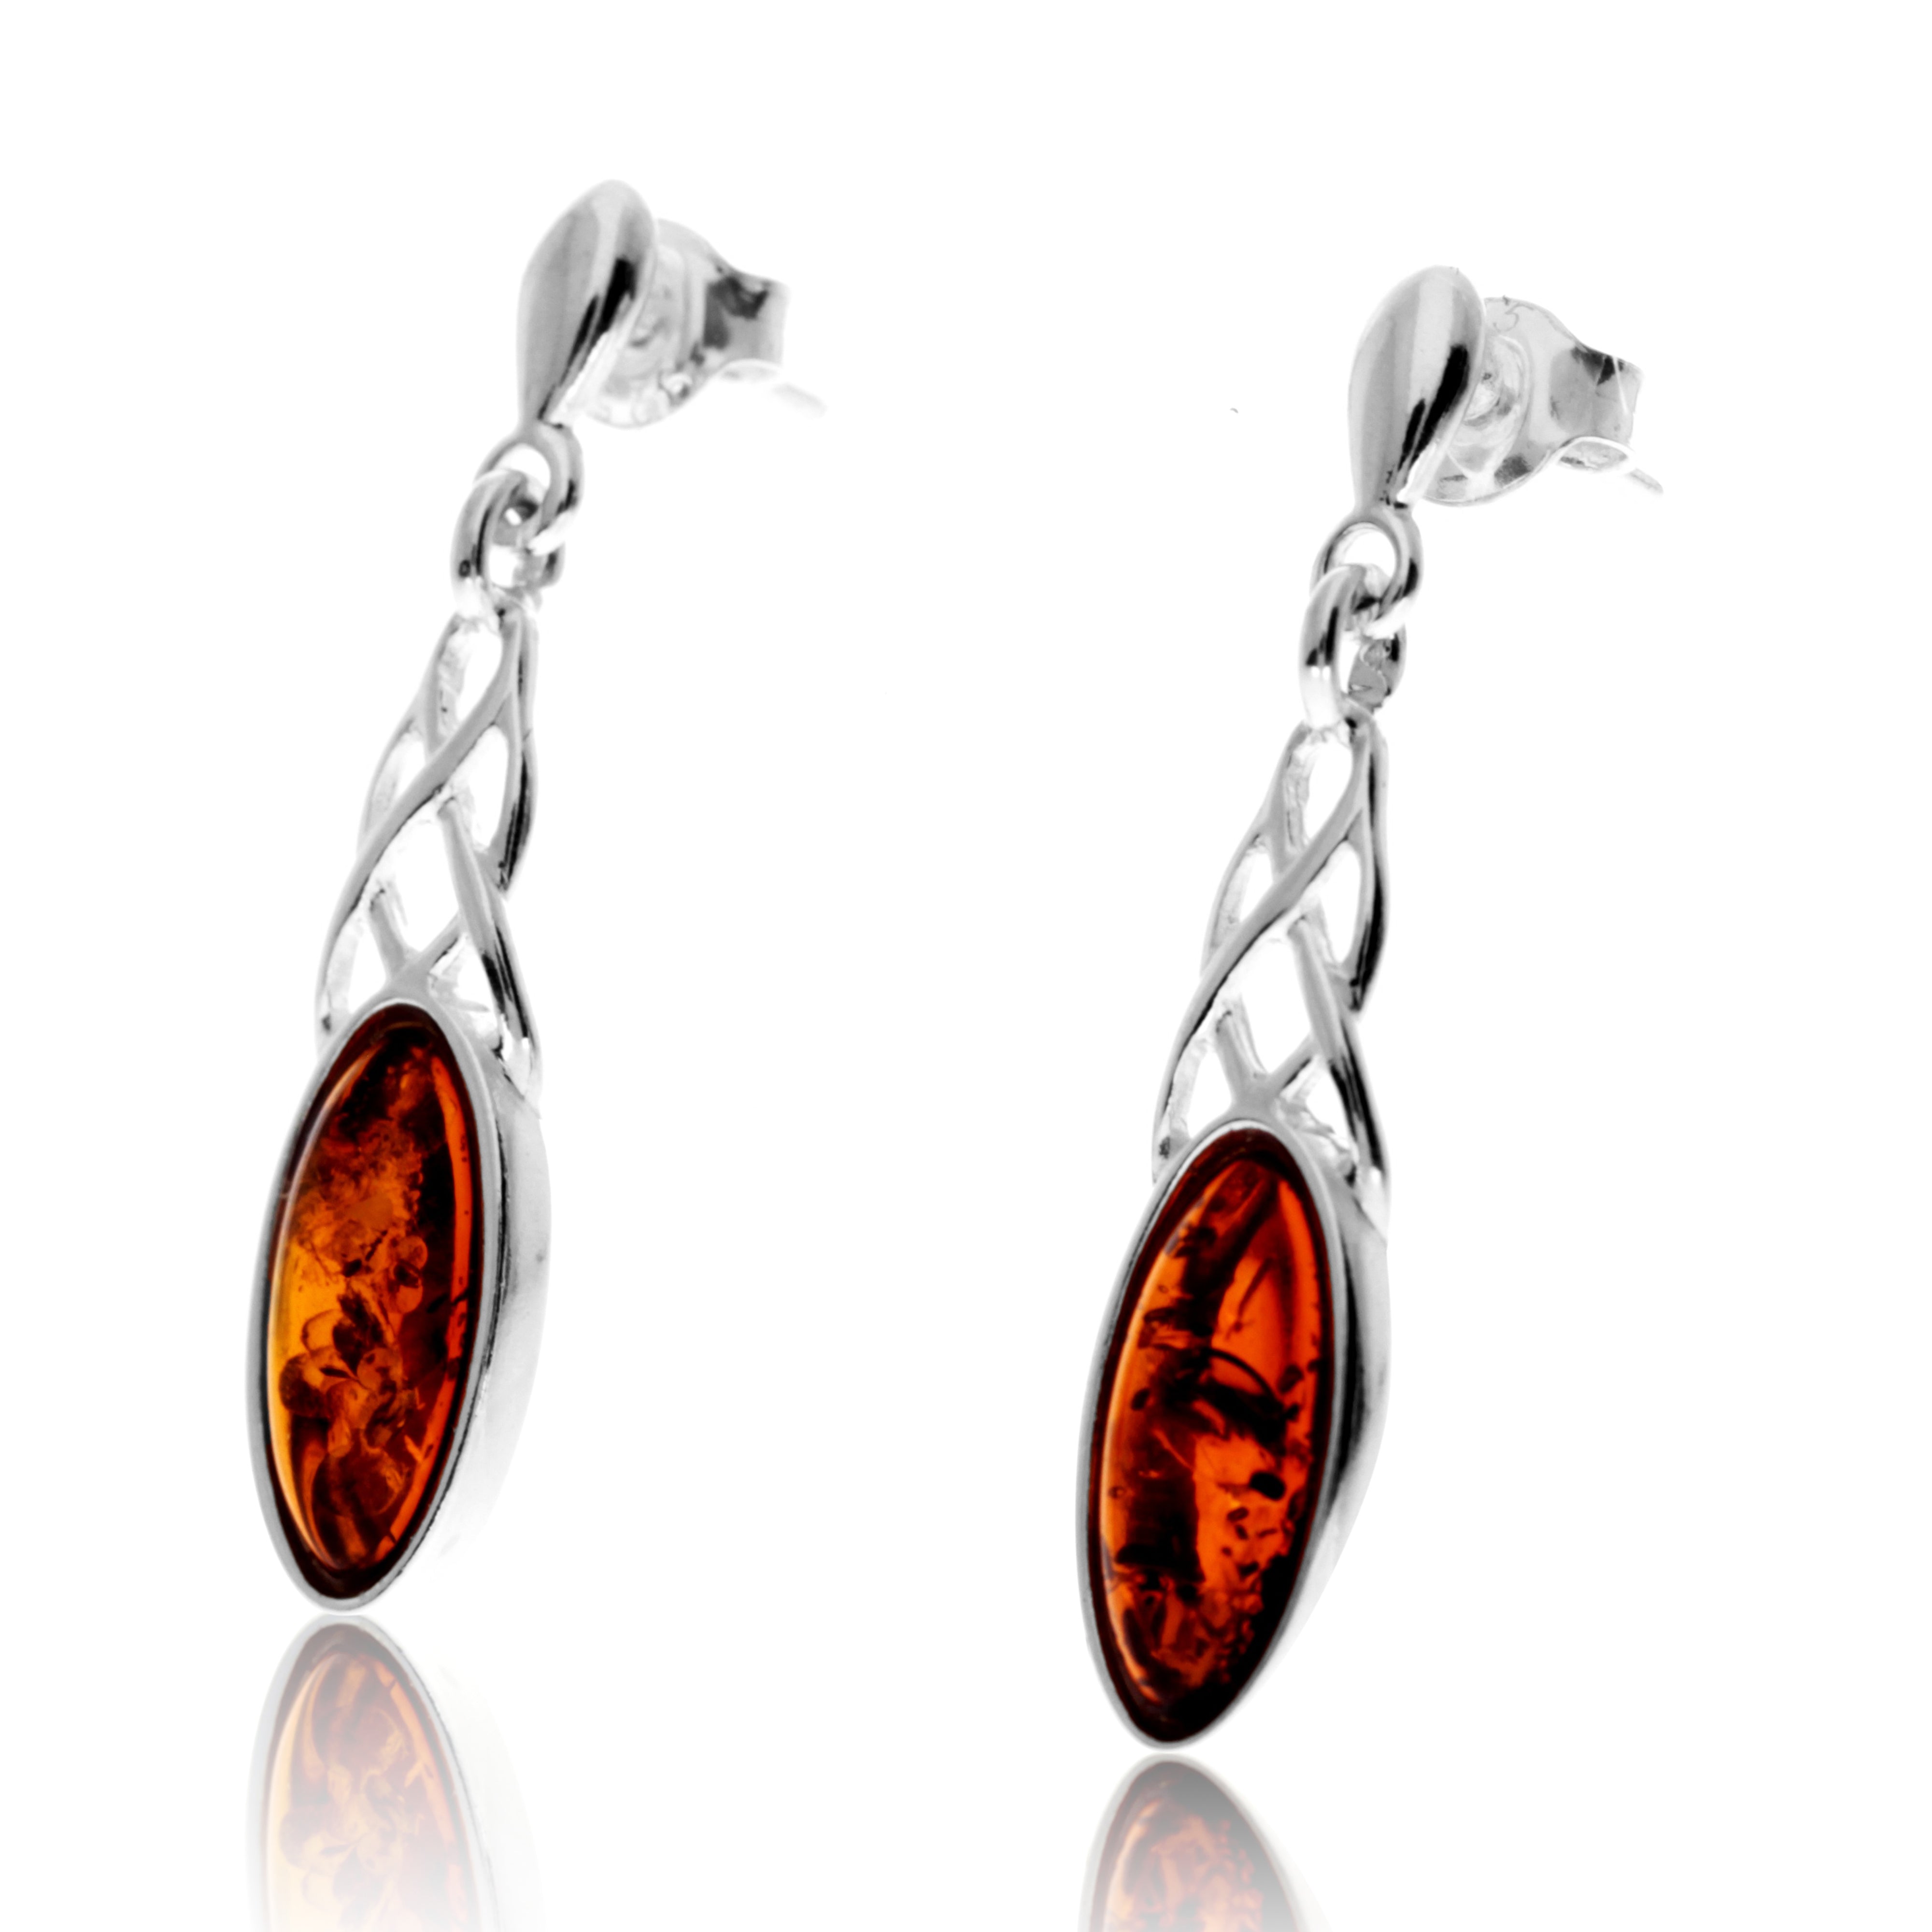 925 Sterling Silver & Genuine Baltic Amber Celtic Drop Earrings - GL1025